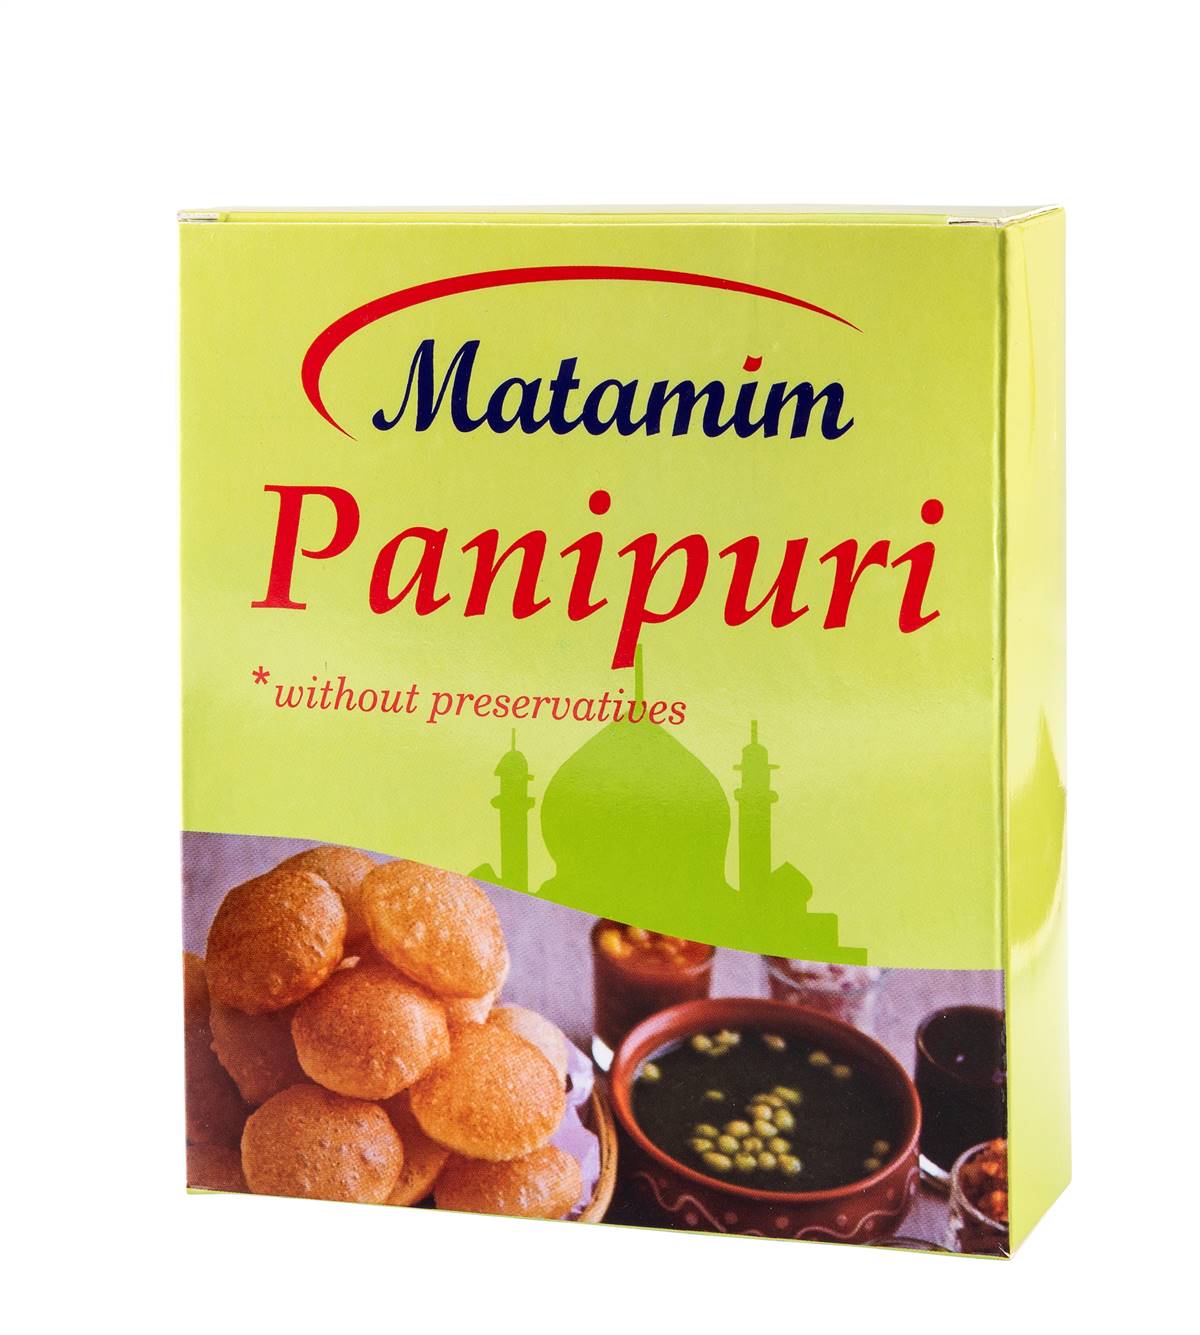 Frying Puri (panipuri)